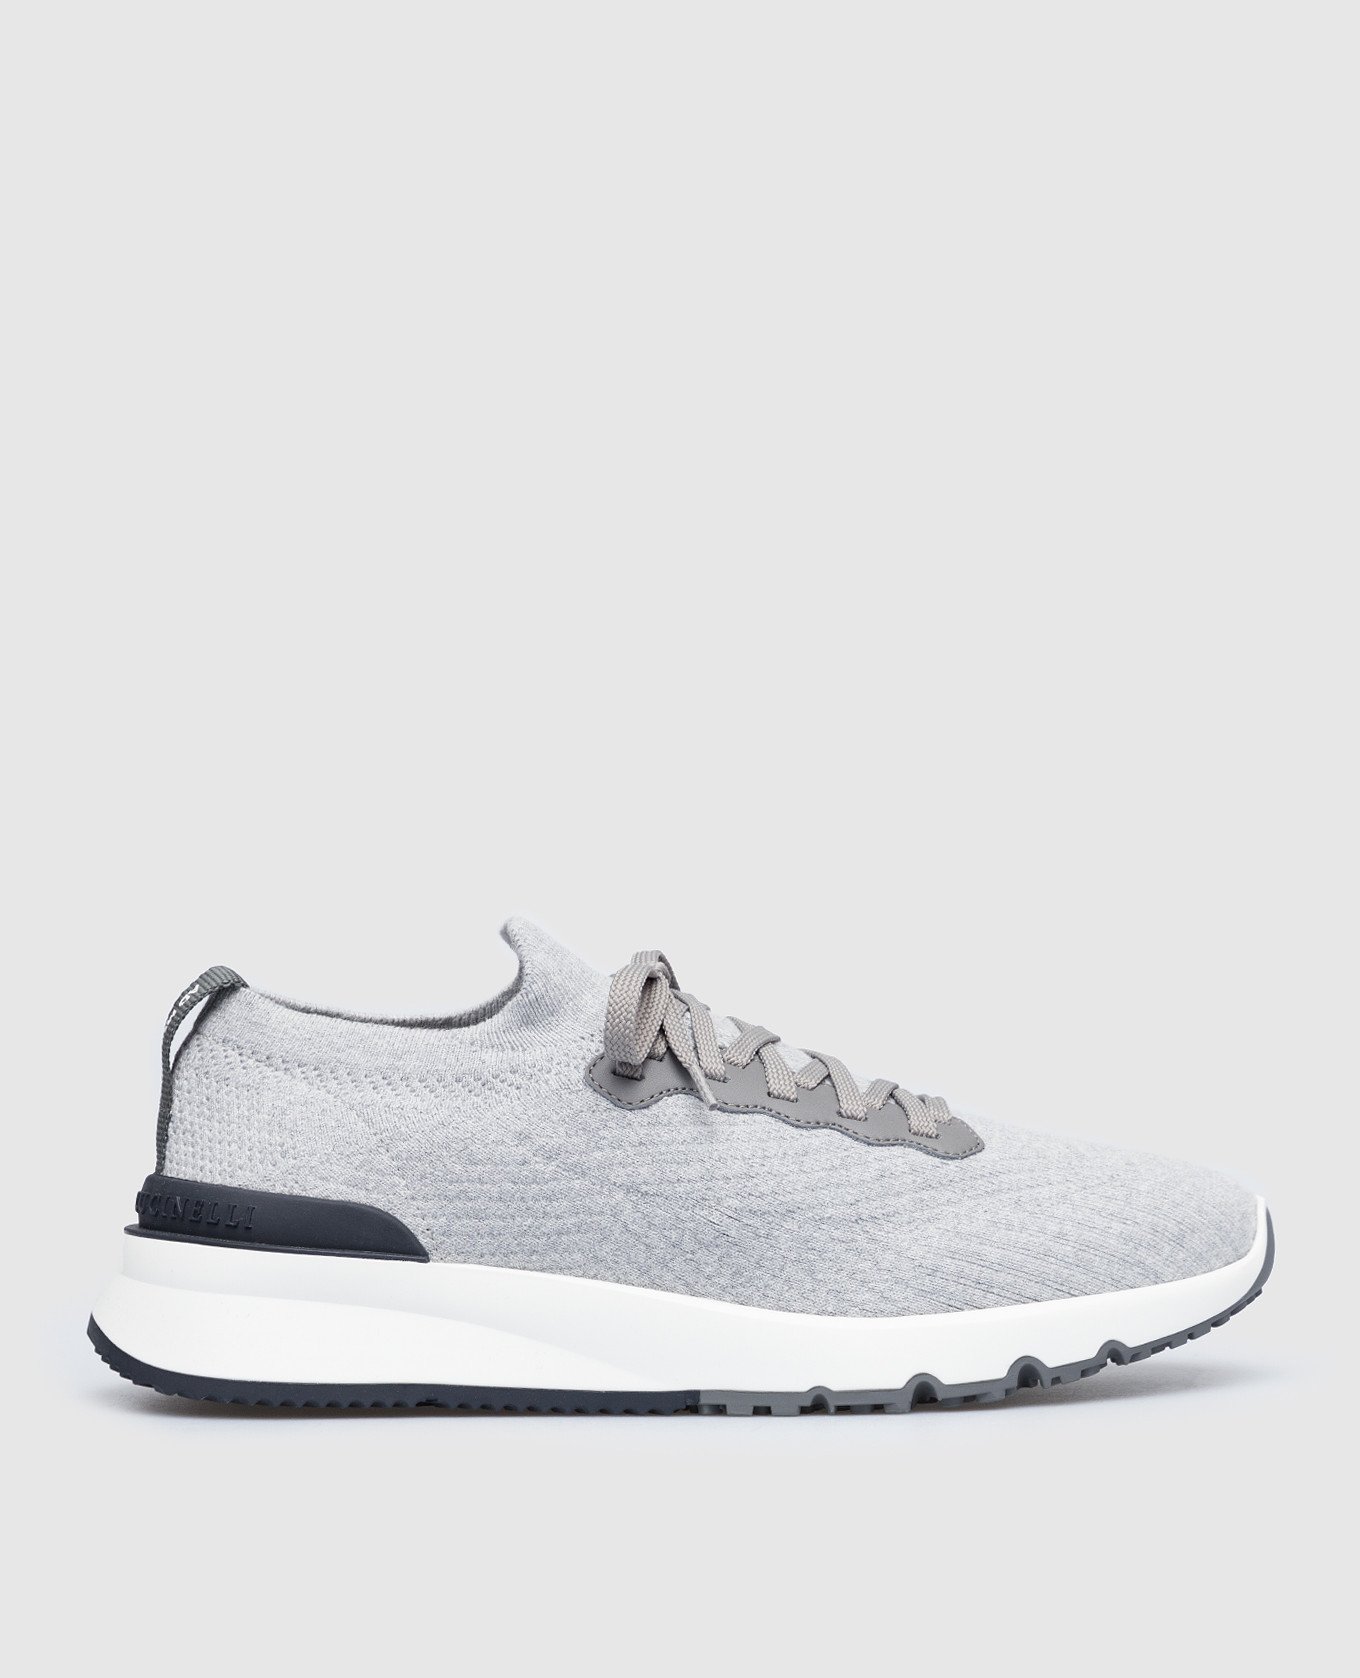 Light gray sneakers